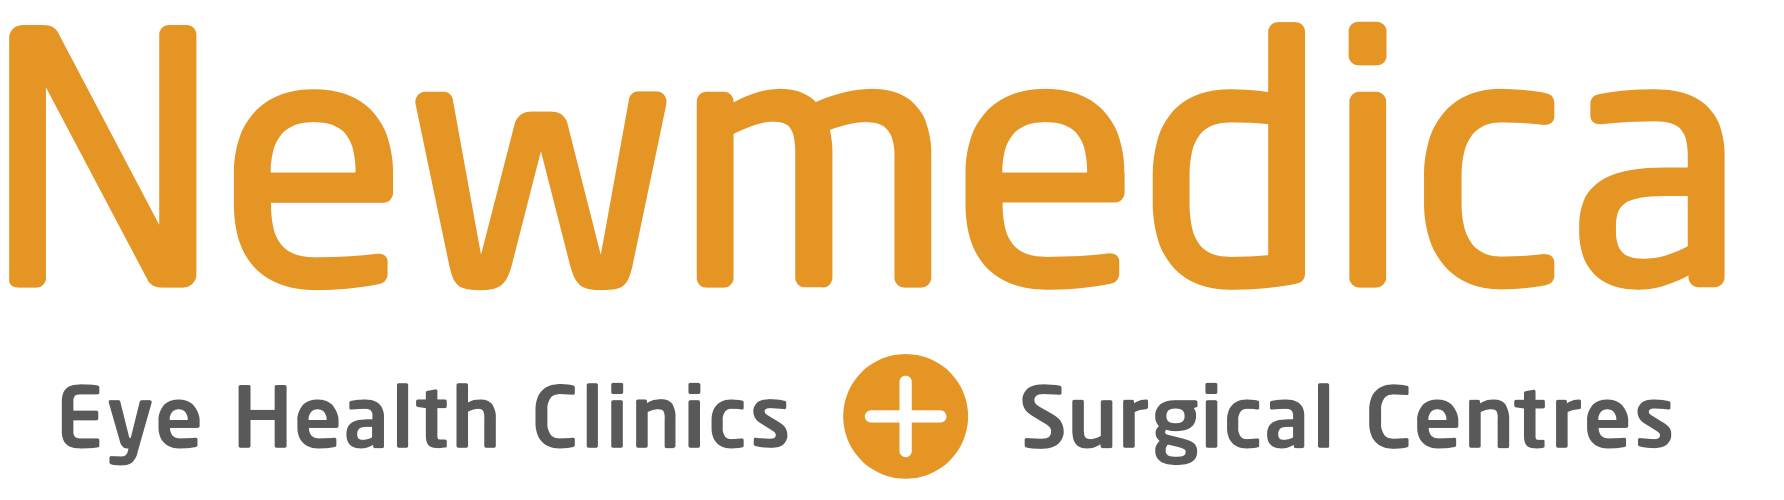 Plymouth - Newmedica logo